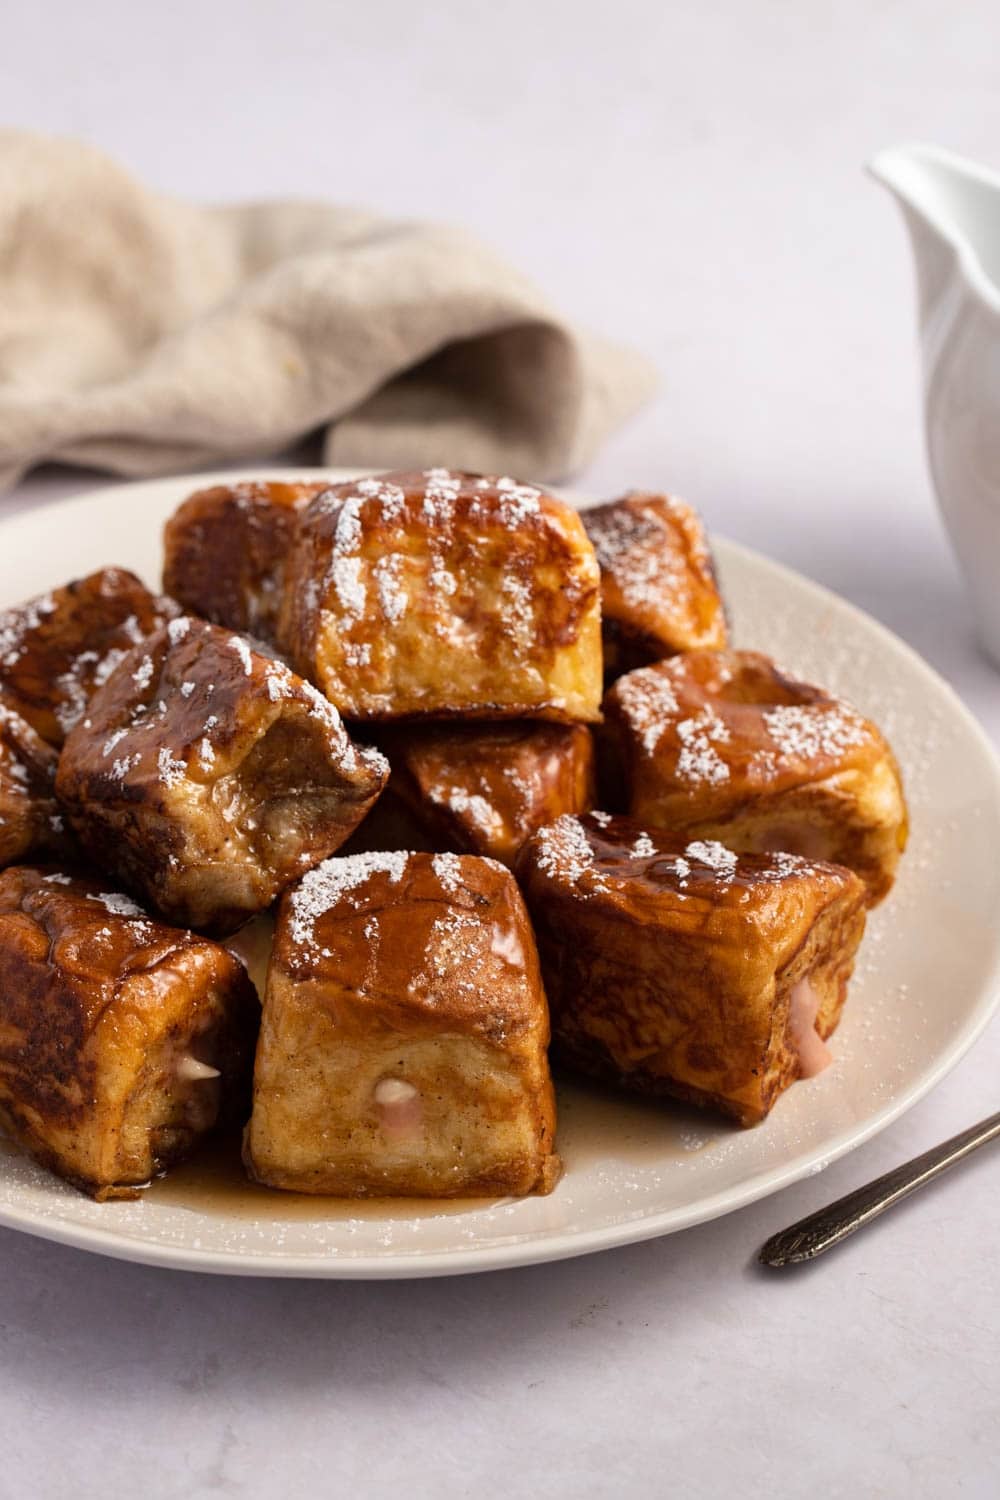 Homemade Hawaiian Roll French Toast with Honey and Powdered Sugar